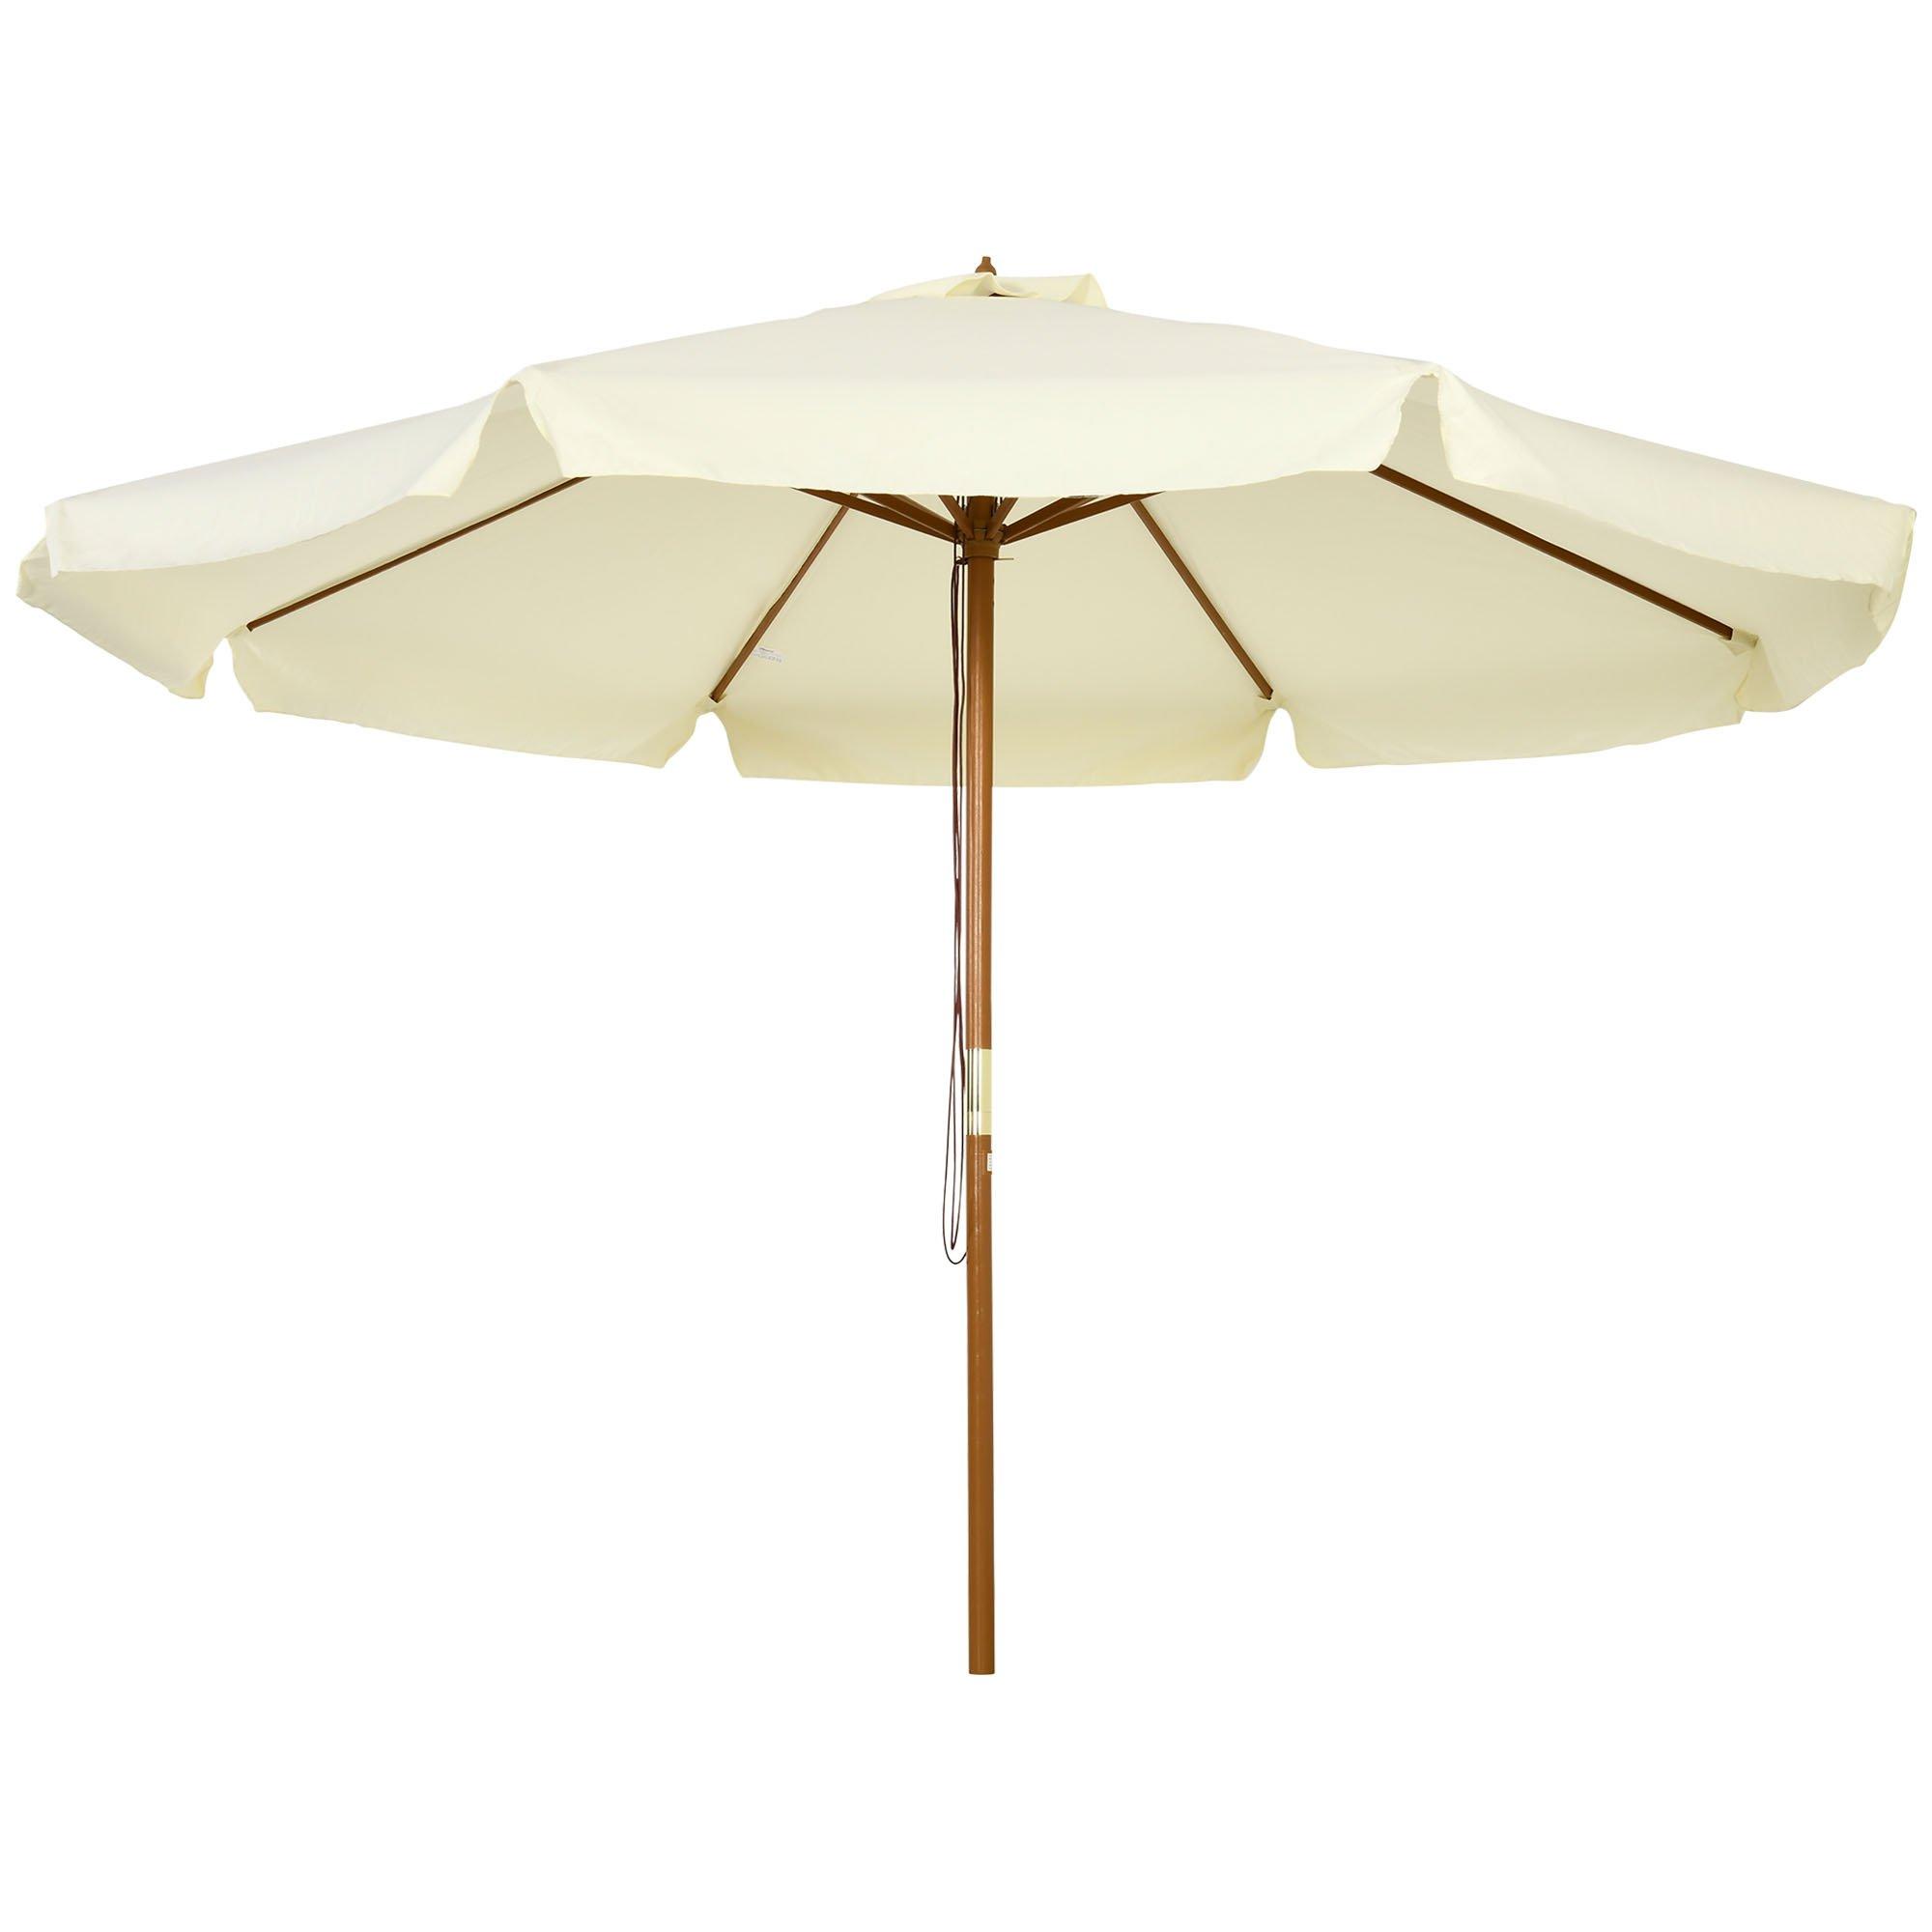 3.3(m) Garden Parasol Umbrella Outdoor Sun Shade Canopy with 8 Ribs Beige